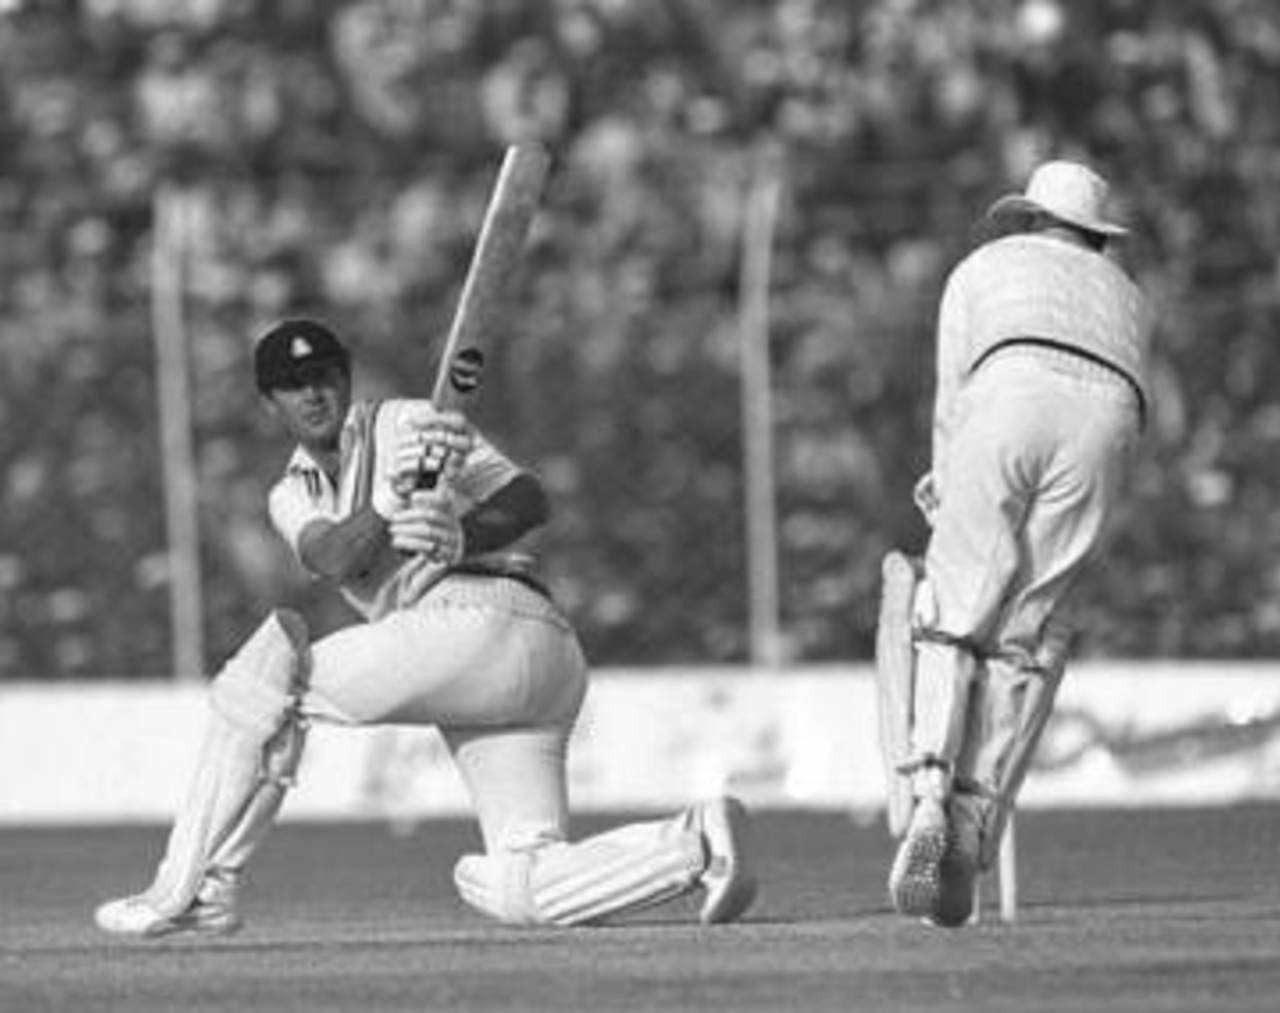 When Geoff Boycott scored a Test hundred in an innings, often no other England batsmen did&nbsp;&nbsp;&bull;&nbsp;&nbsp;Getty Images